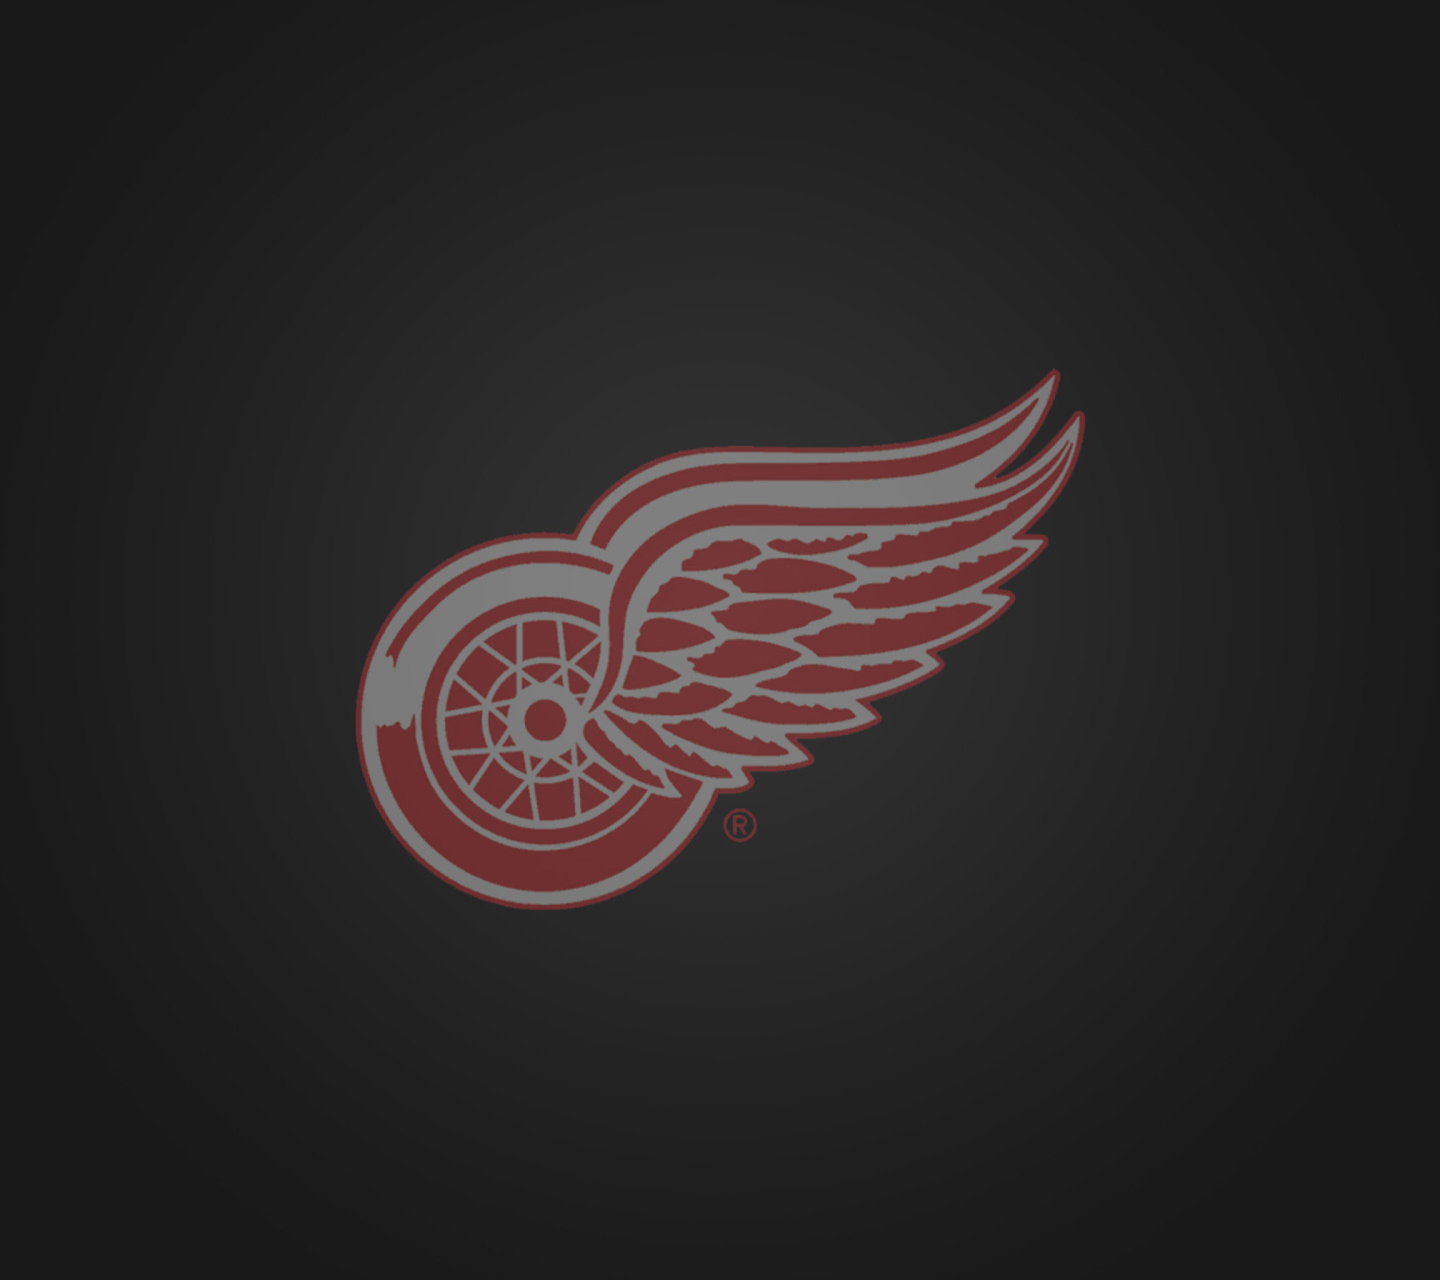 Detroit Red Wings wallpaper 1440x1280